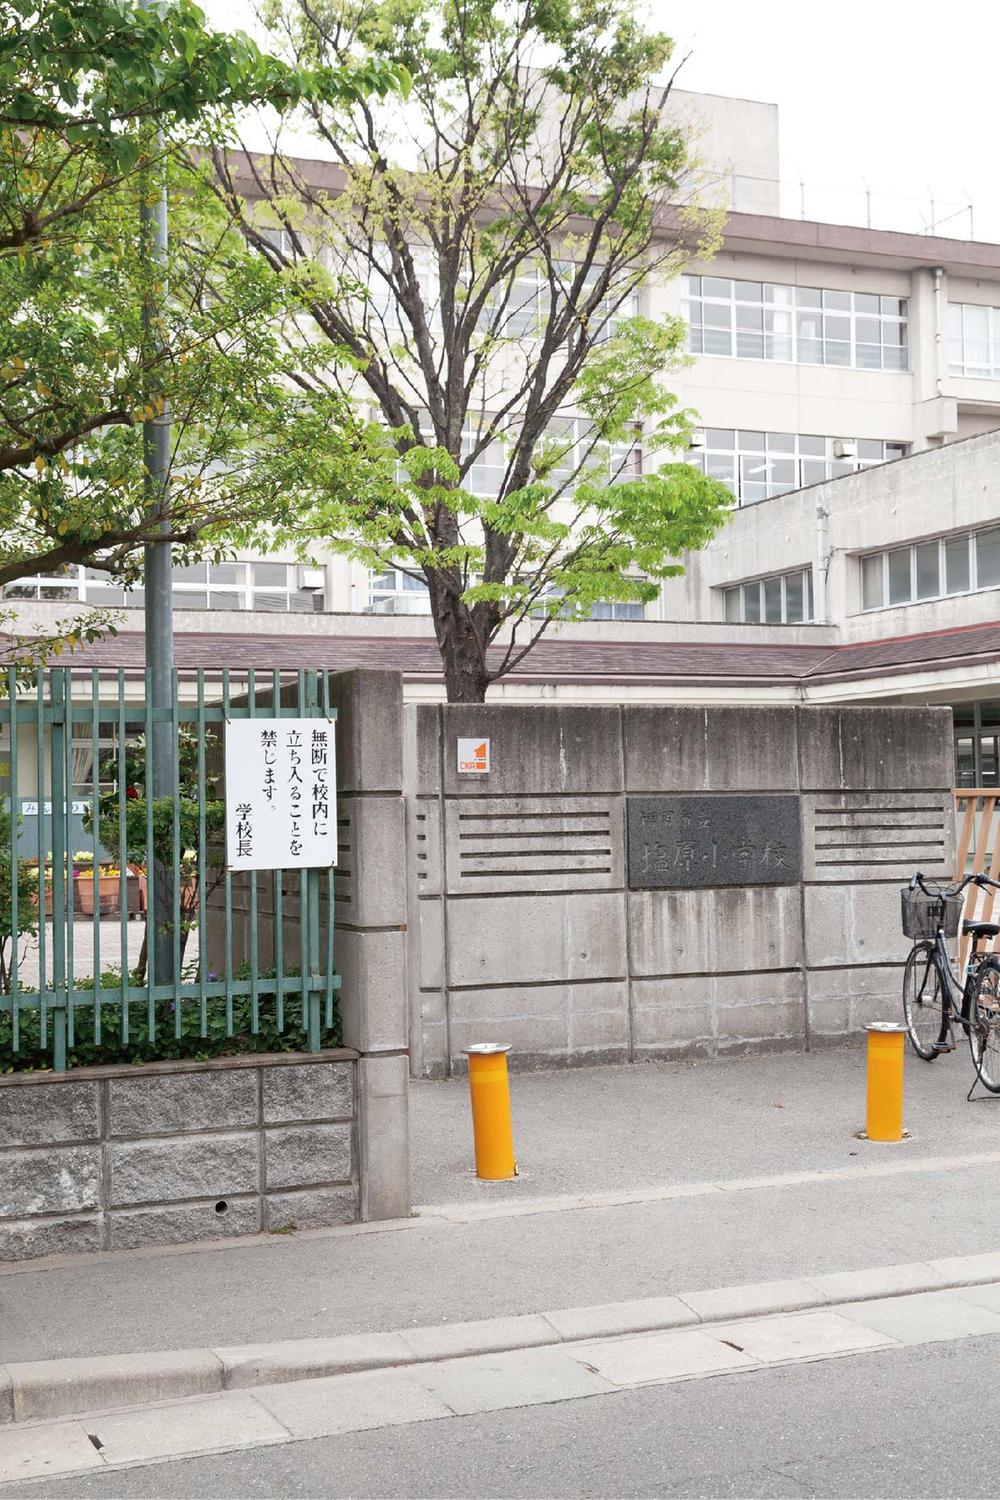 Primary school. 960m to Shiobara elementary school